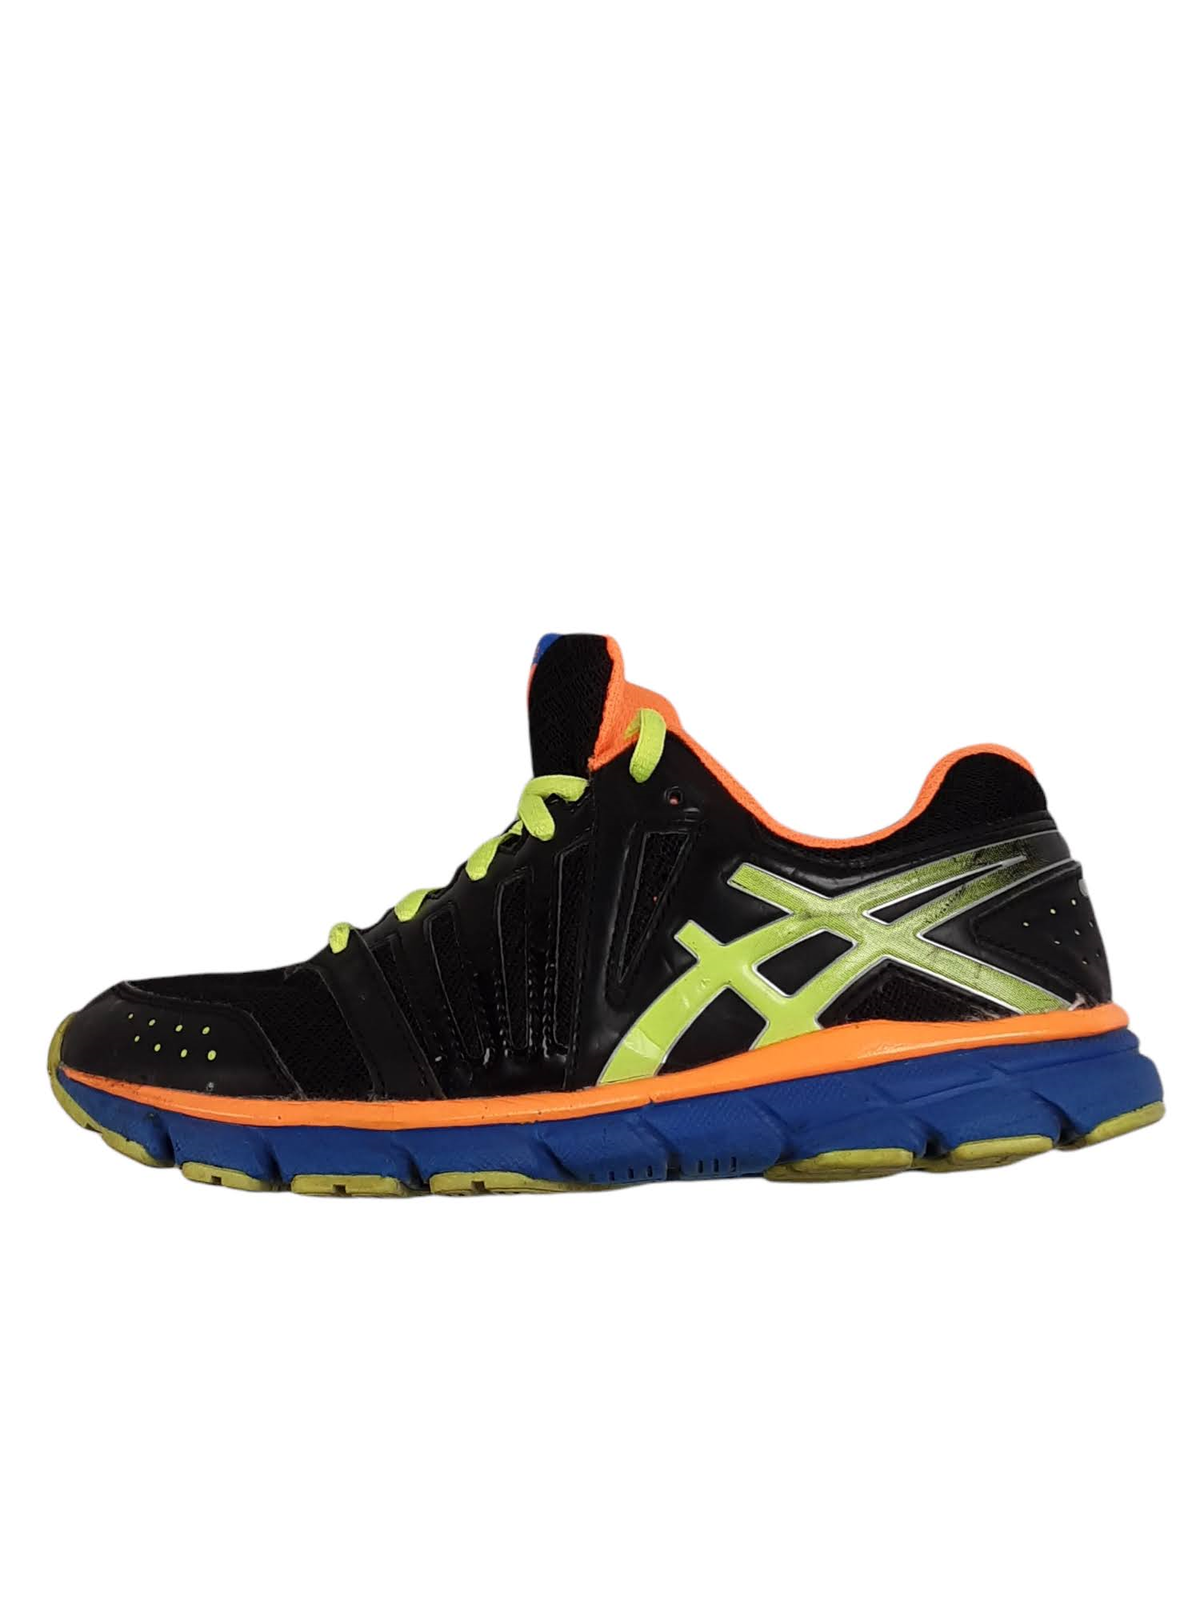 Asics Gel Lyte 33 2 Flash Yellow Lightning Running Shoes Girls (Size: 4)  C332N | eBay